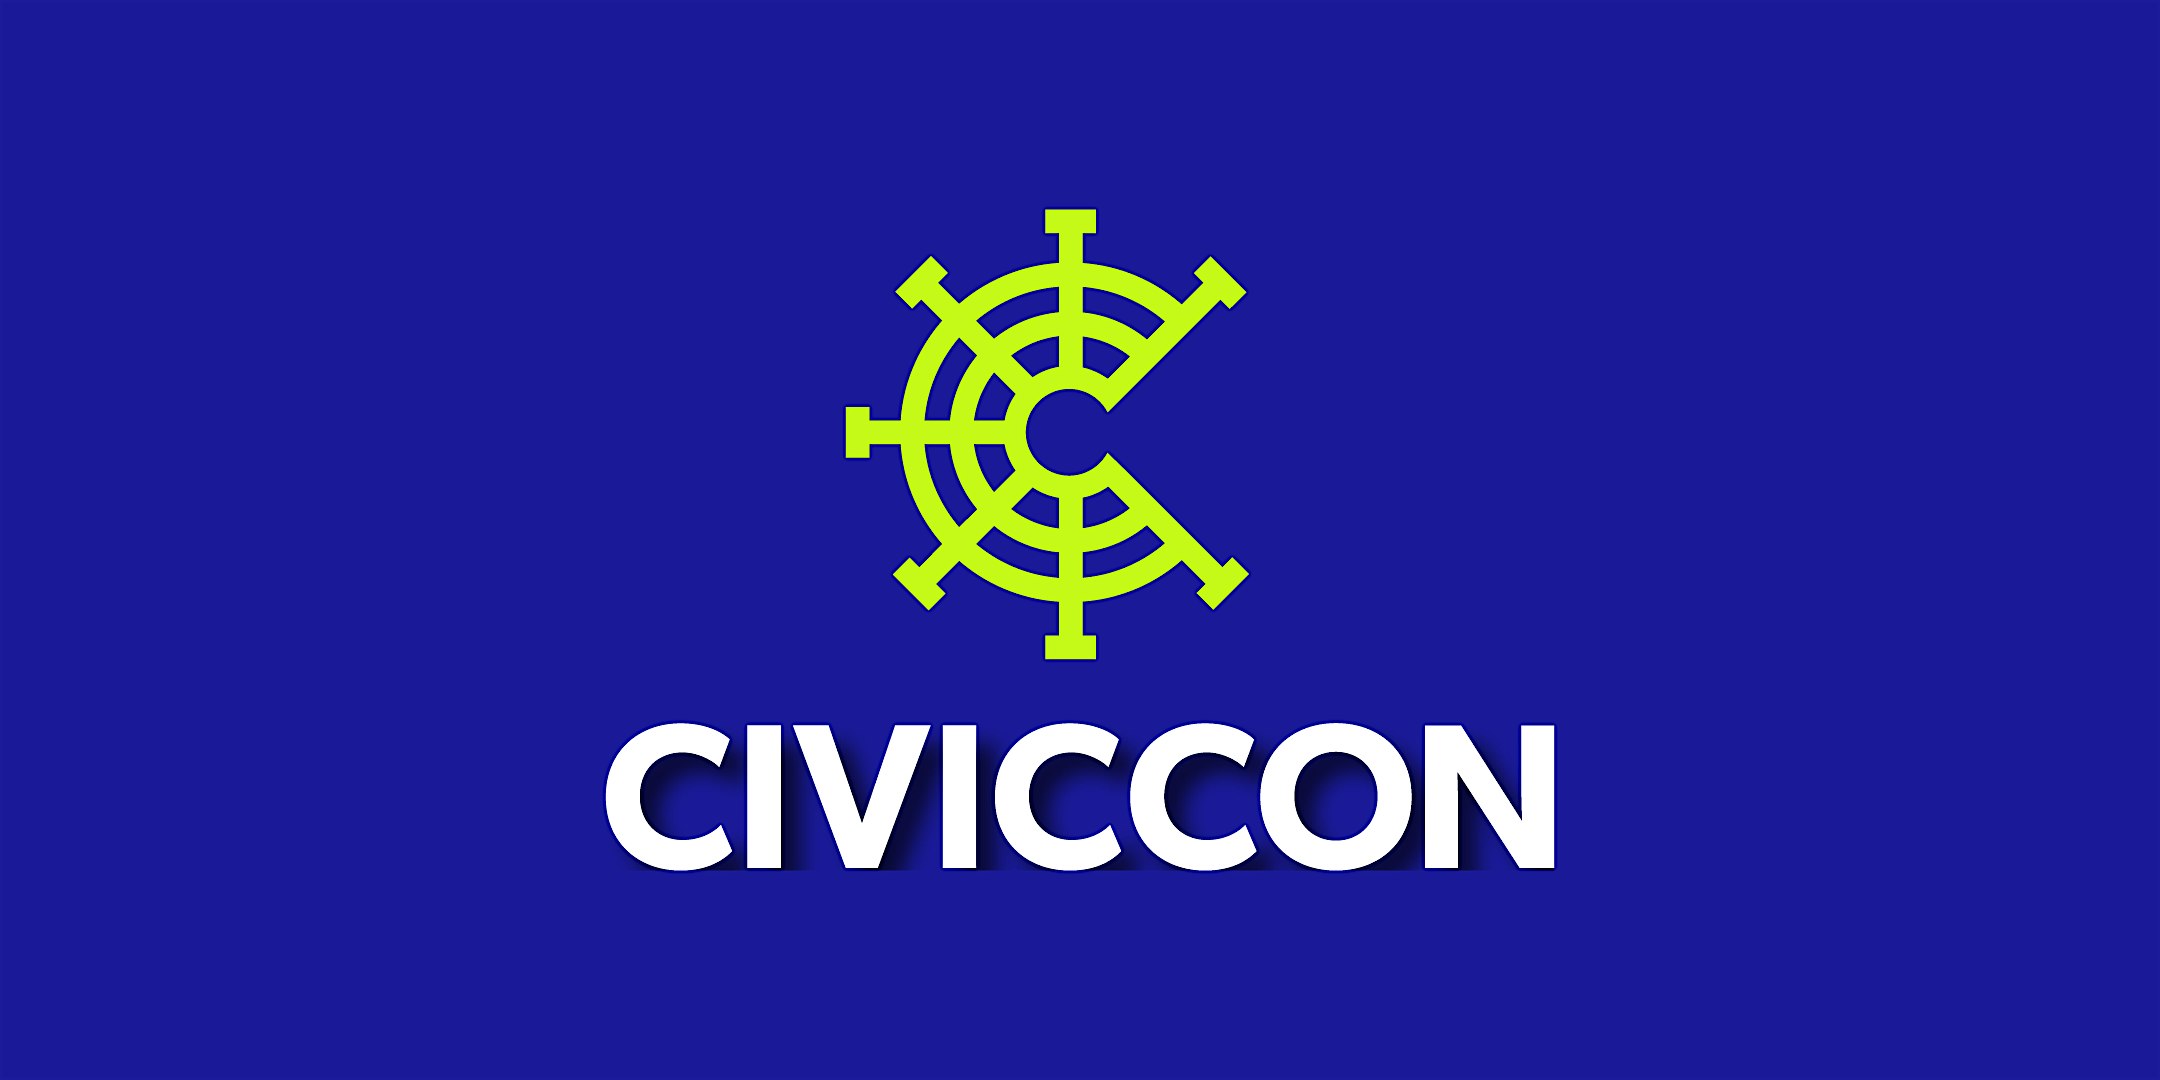 civiccon logo